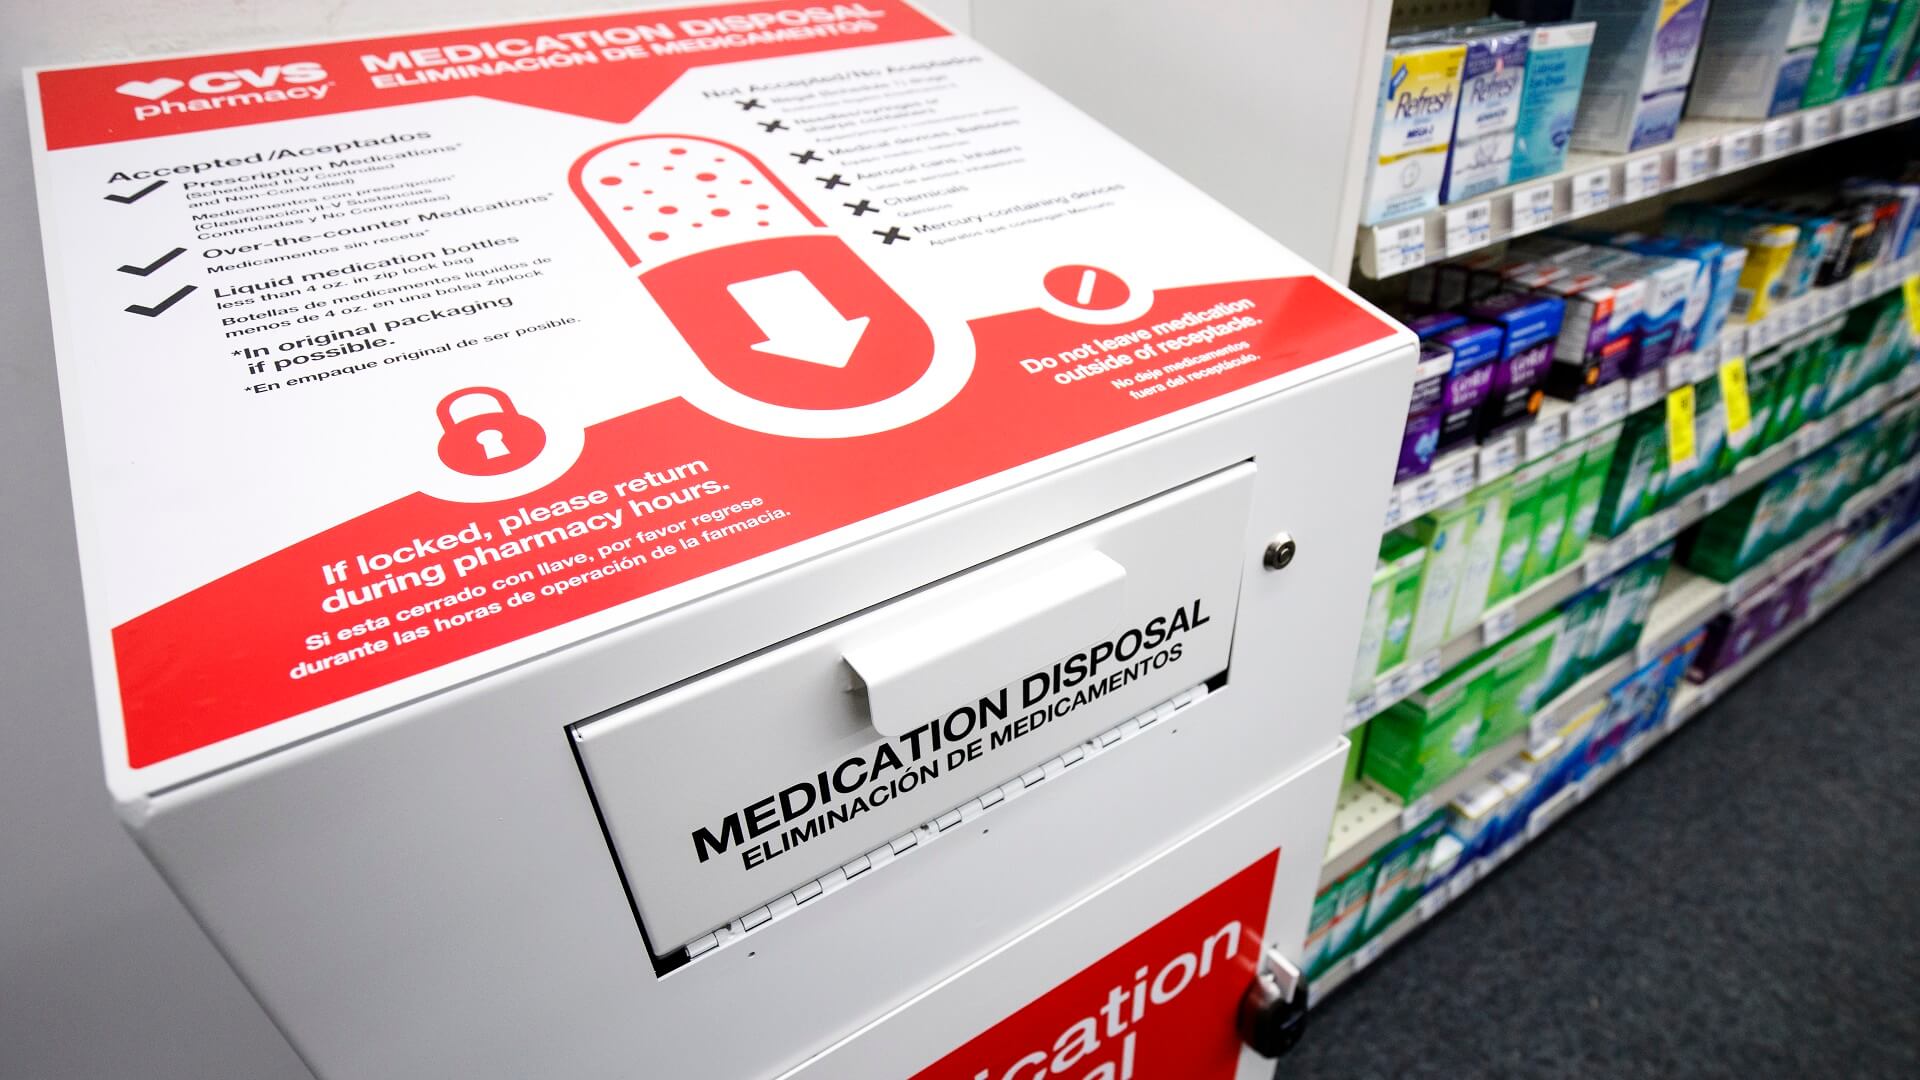 A medication disposal bin in the pharmacy